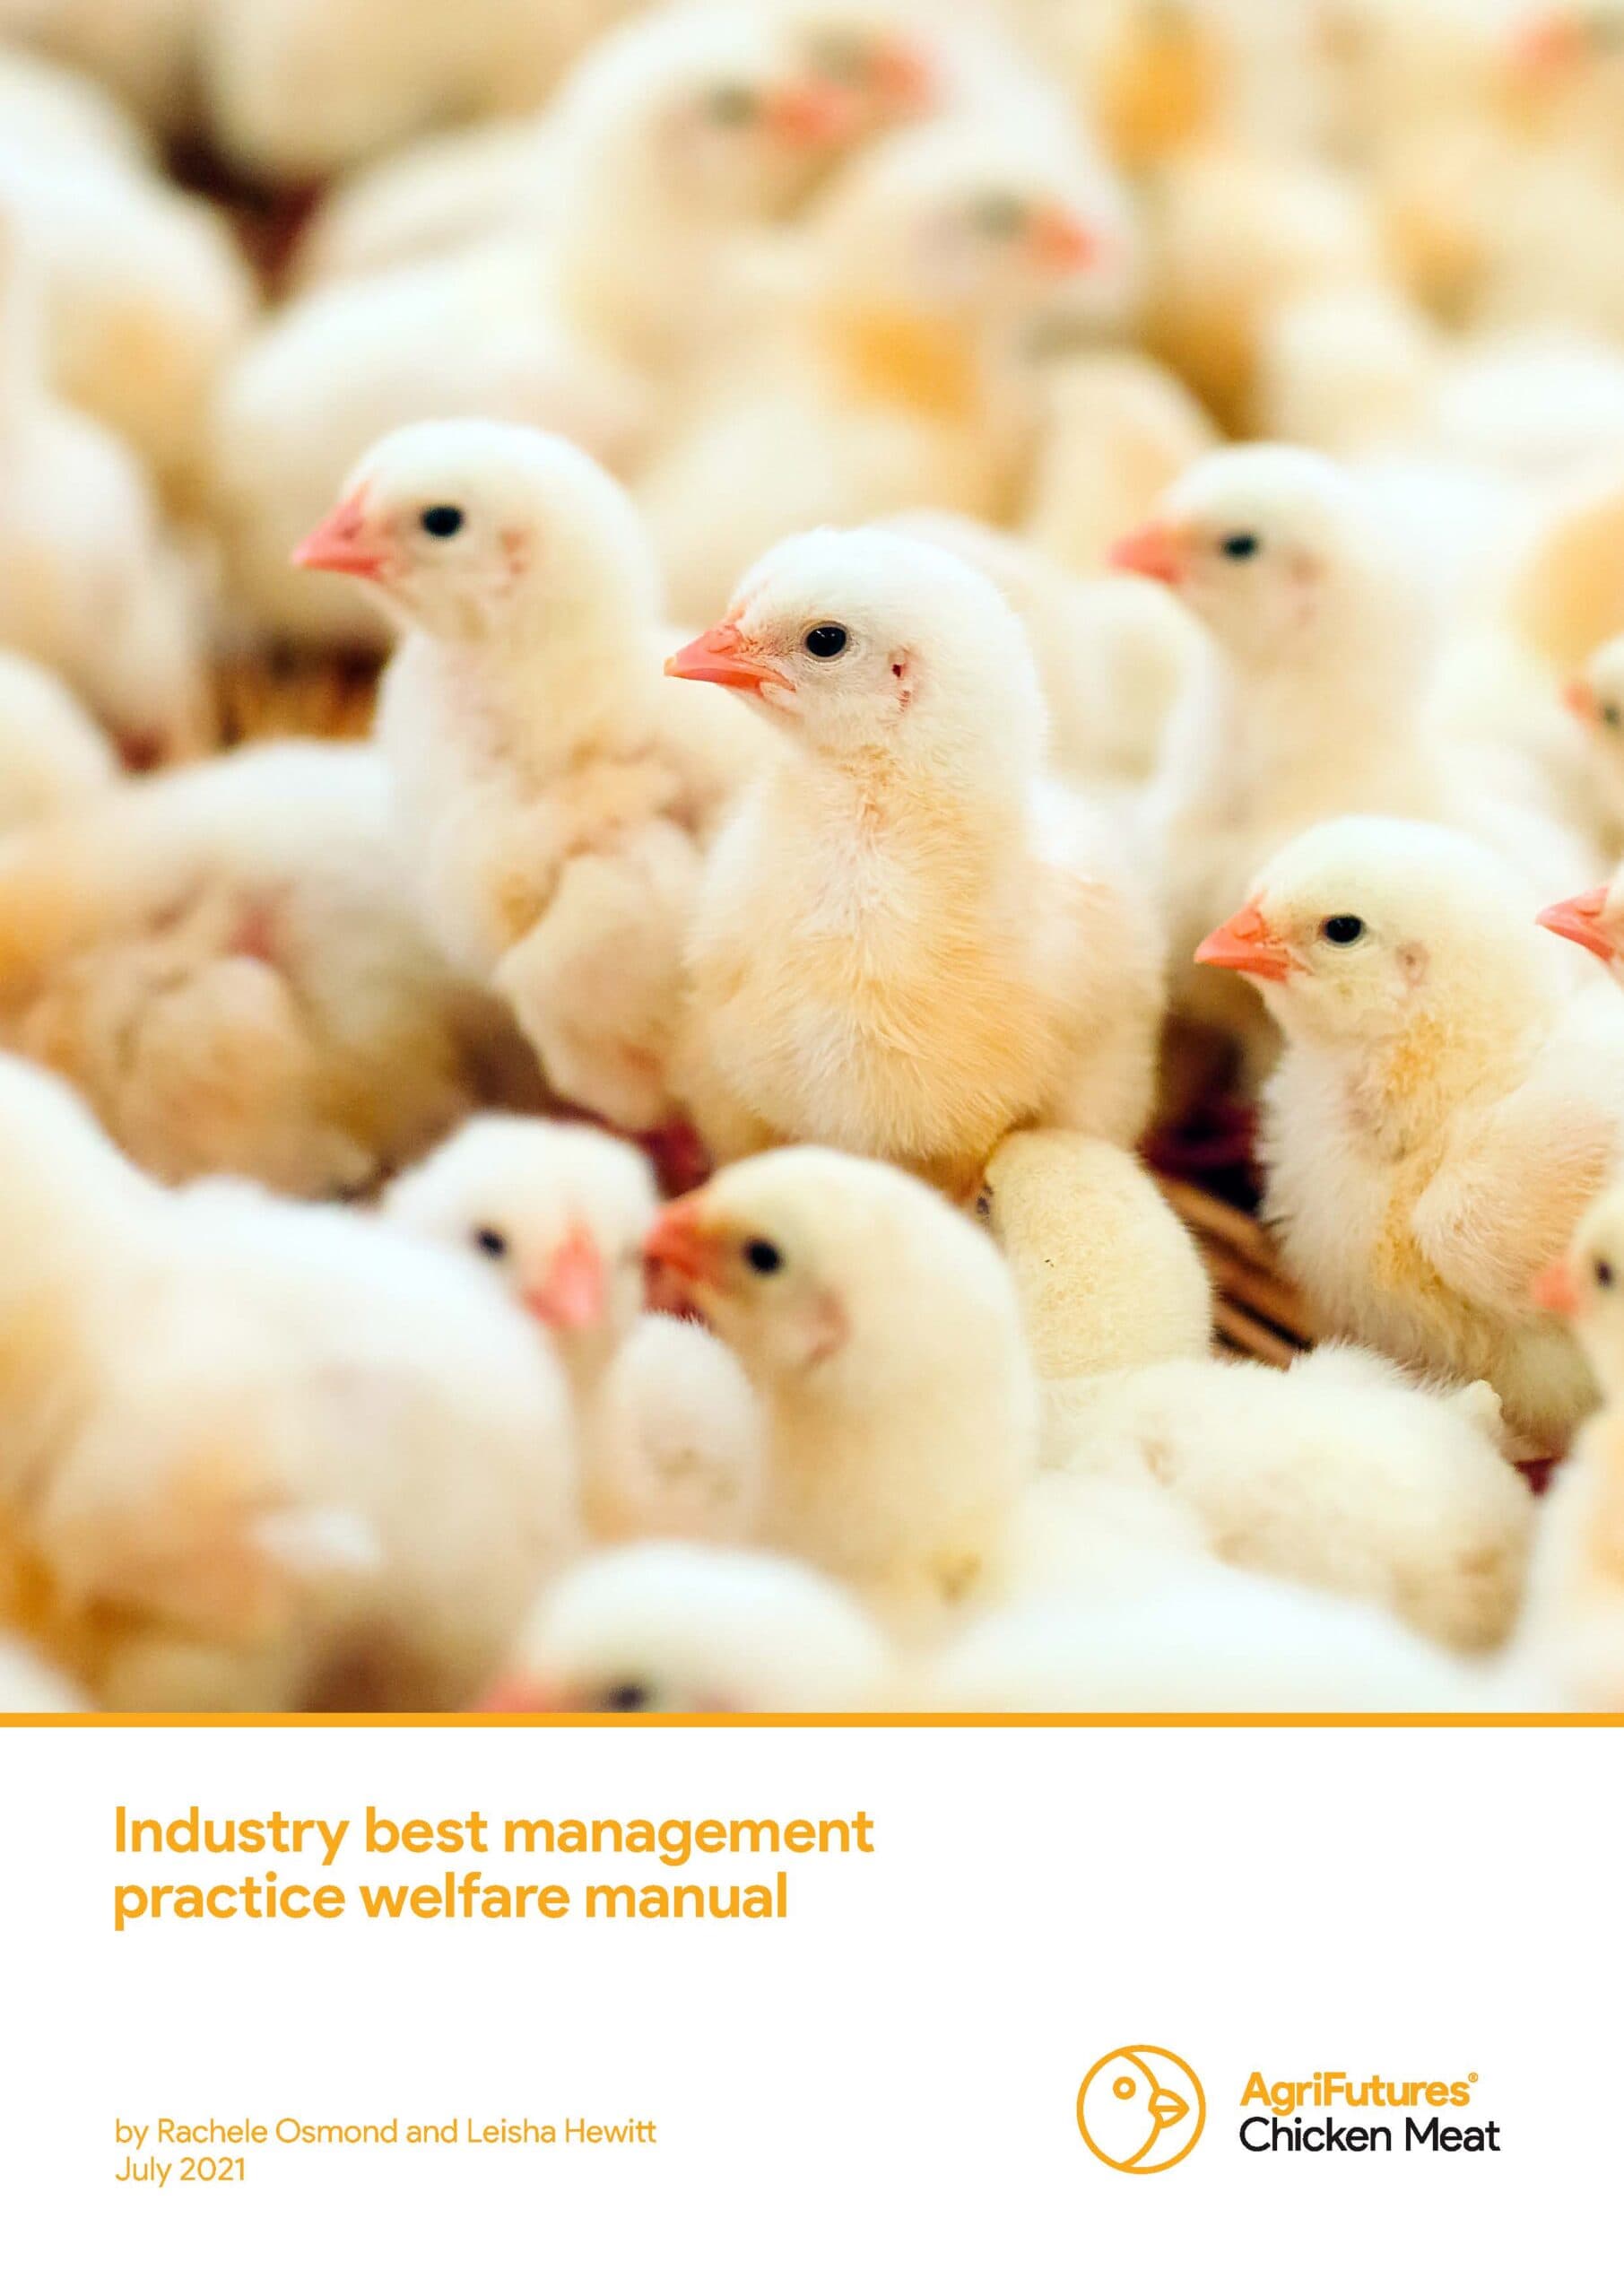 Industry best management practice welfare manual - image